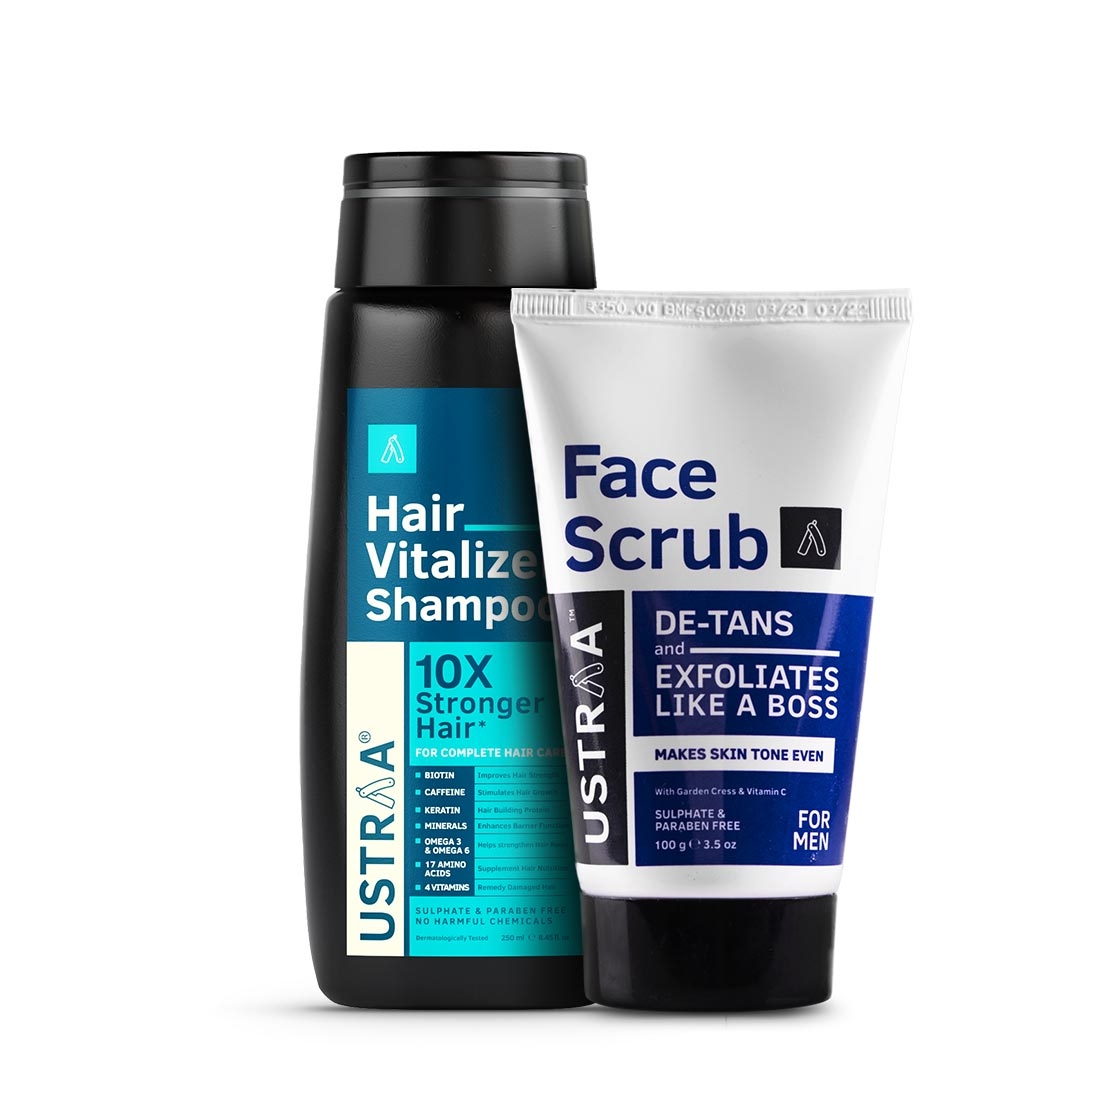 Ustraa | Ustraa Hair Vitalizer Shampoo - 250ml & Face Scrub De Tan - 100g